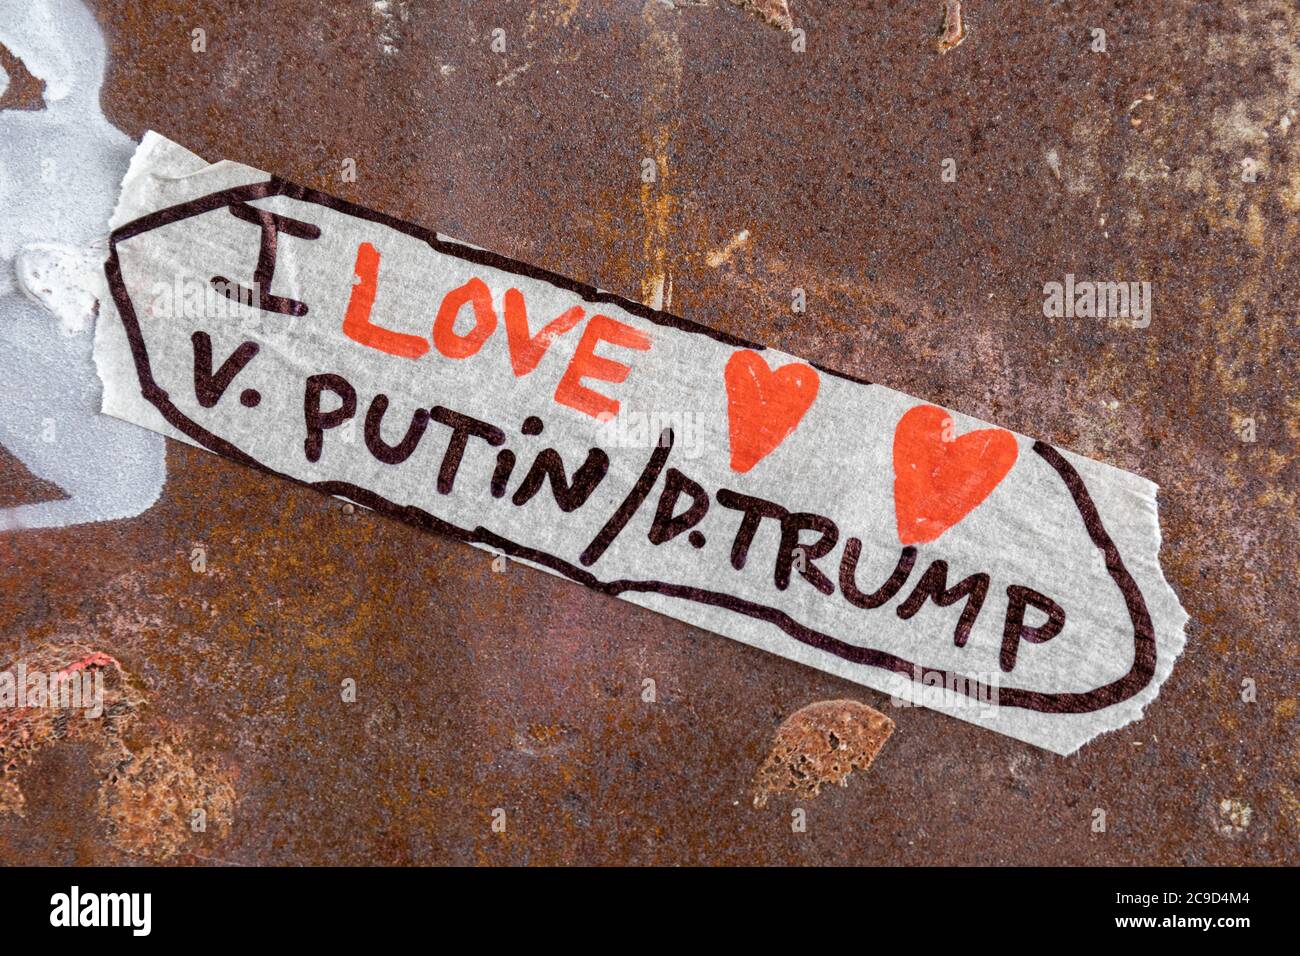 I love V. Putin / D. Trump. Handwritten text on piece of masking tape. Stock Photo